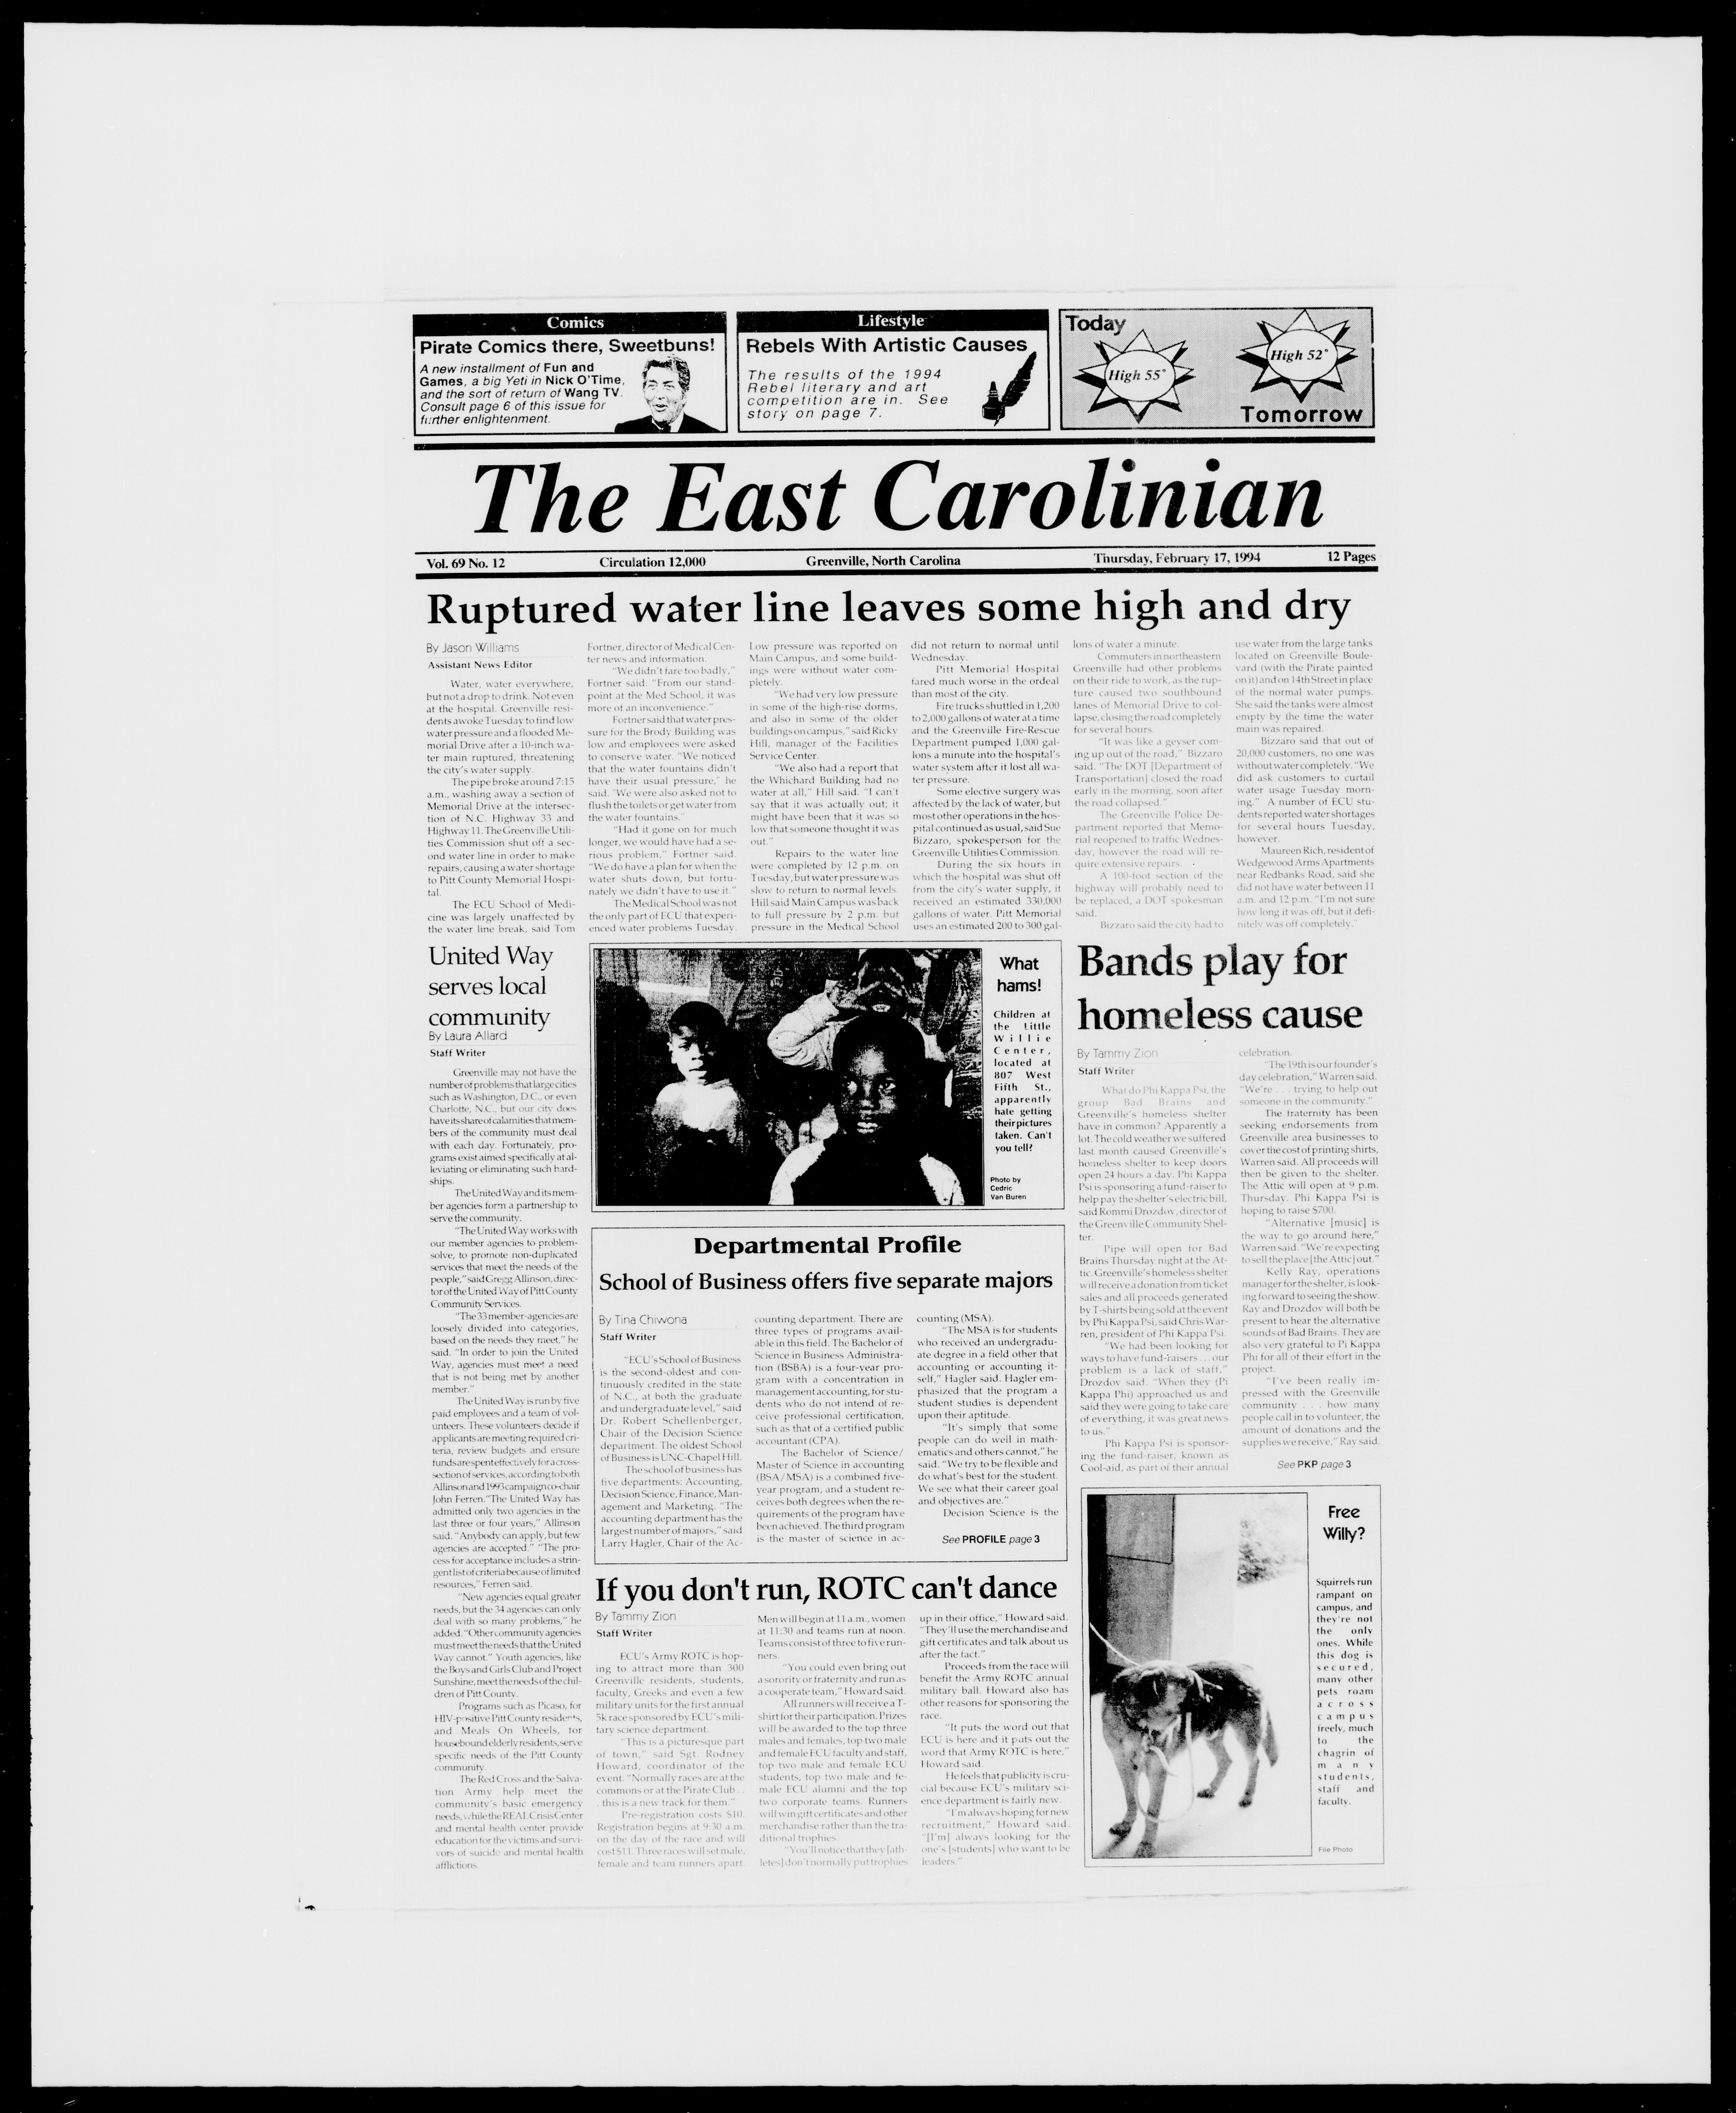 The East Carolinian, February 17, 1994 image